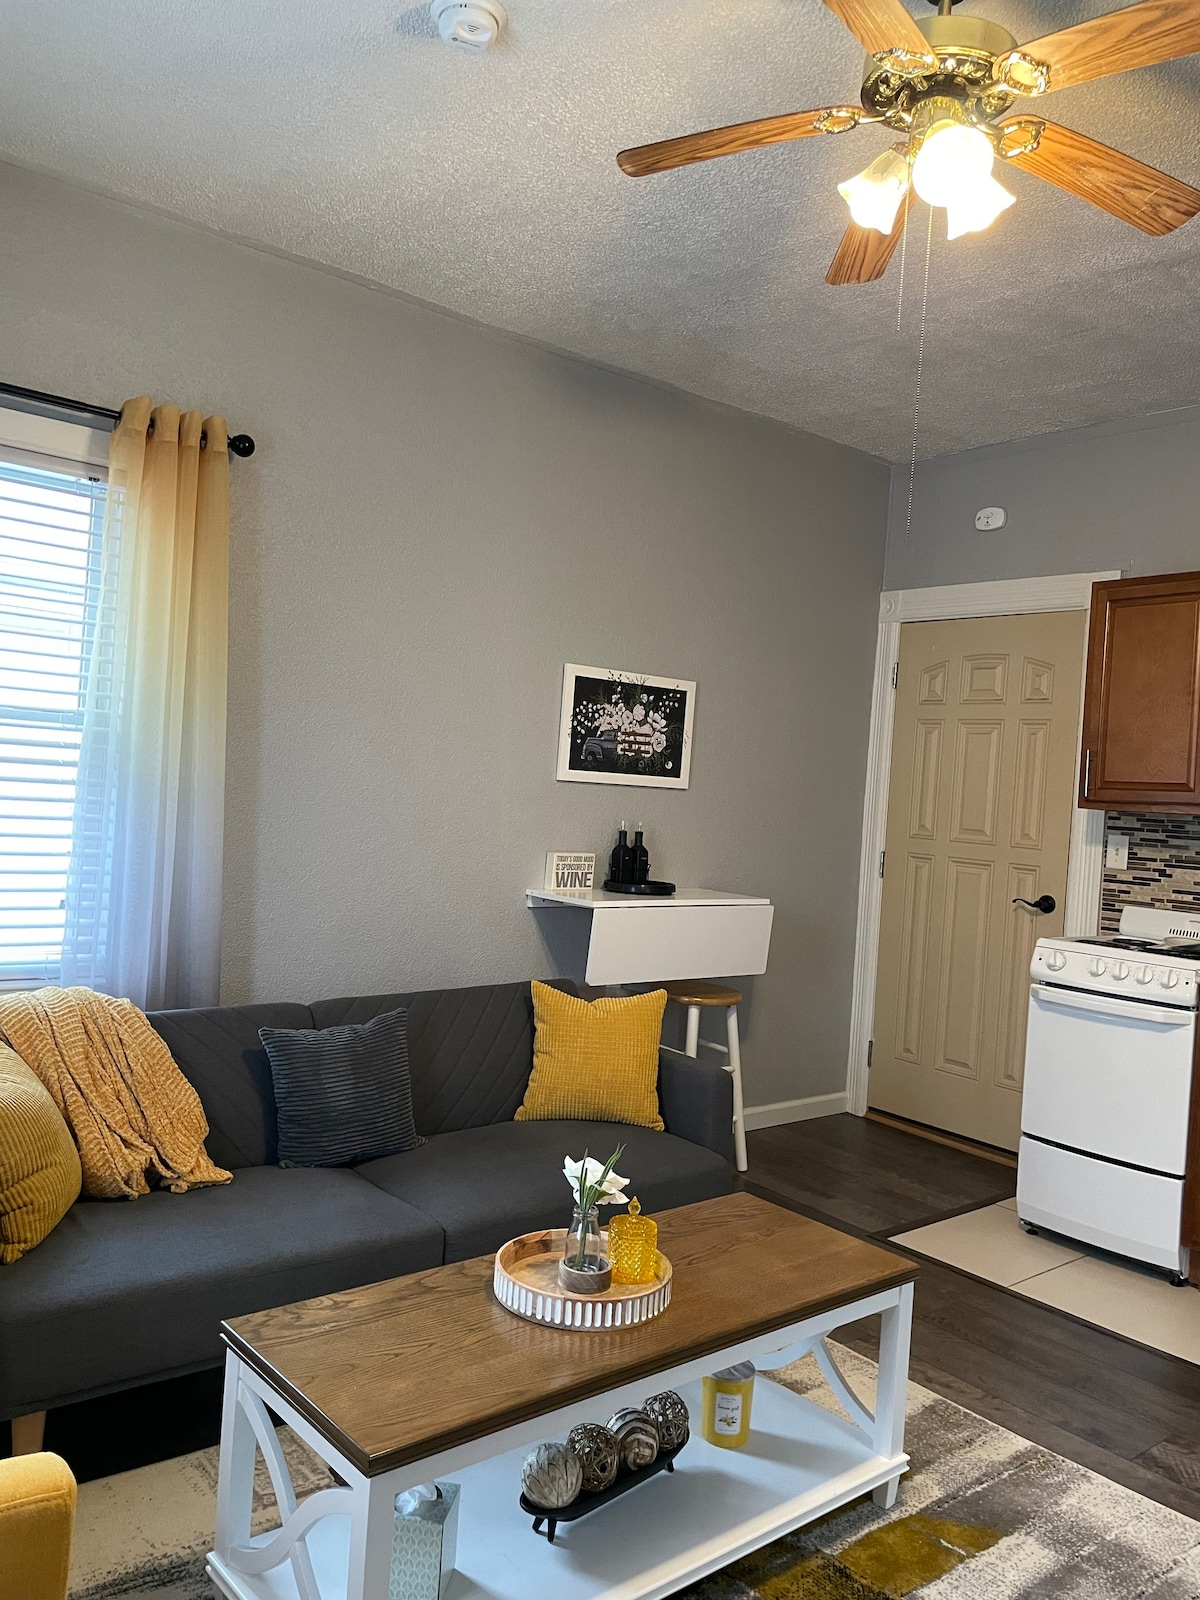 Modern 1 bedroom rental in Utica.